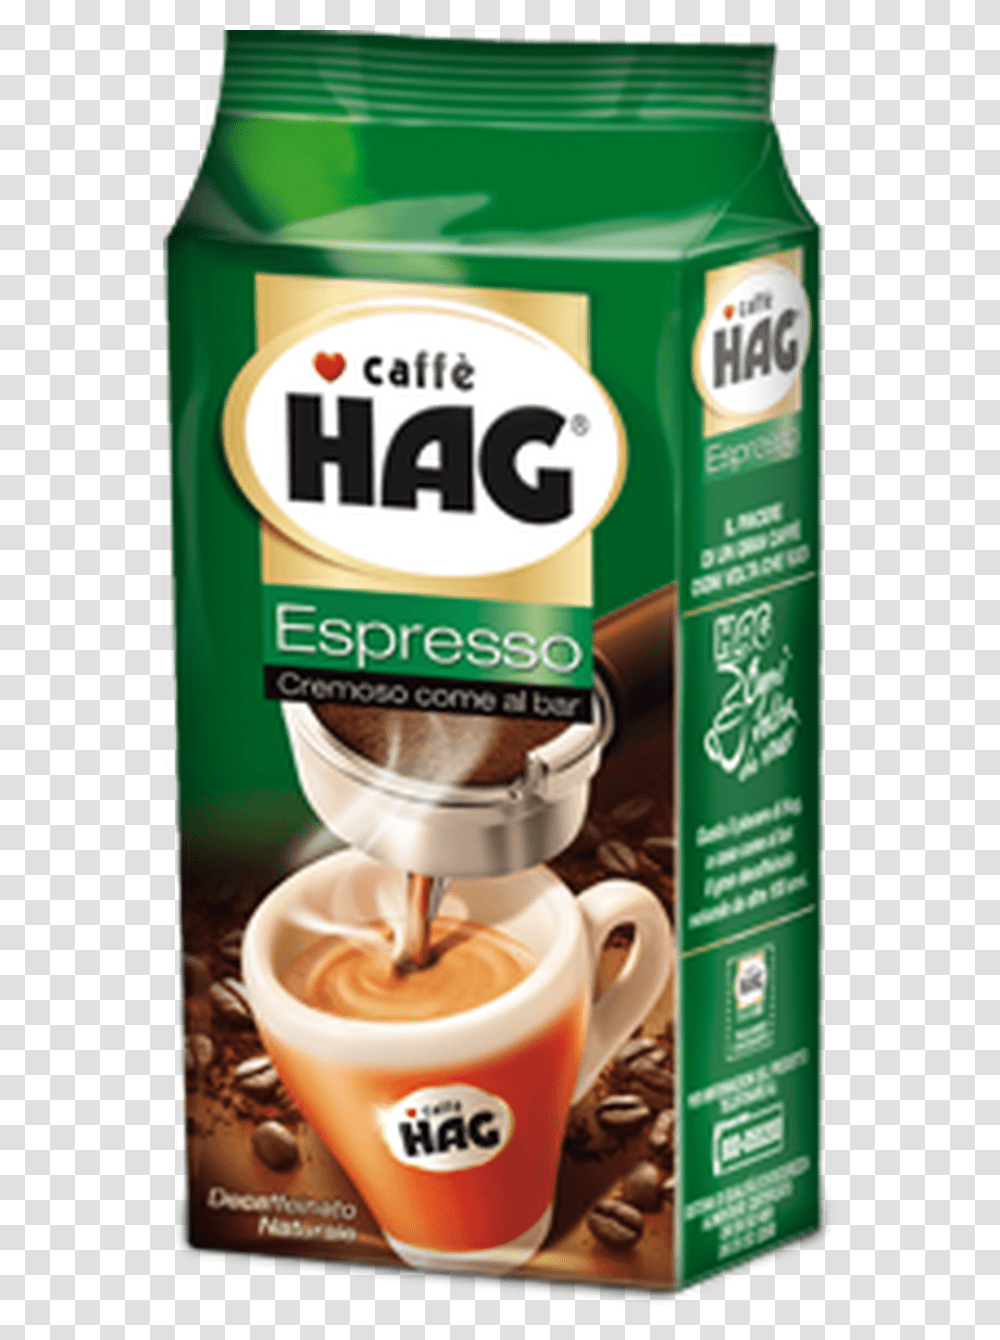 Caffe Hag Espresso Decaf Coffee Brick Decaf Coffee, Beverage, Drink, Appliance, Cup Transparent Png